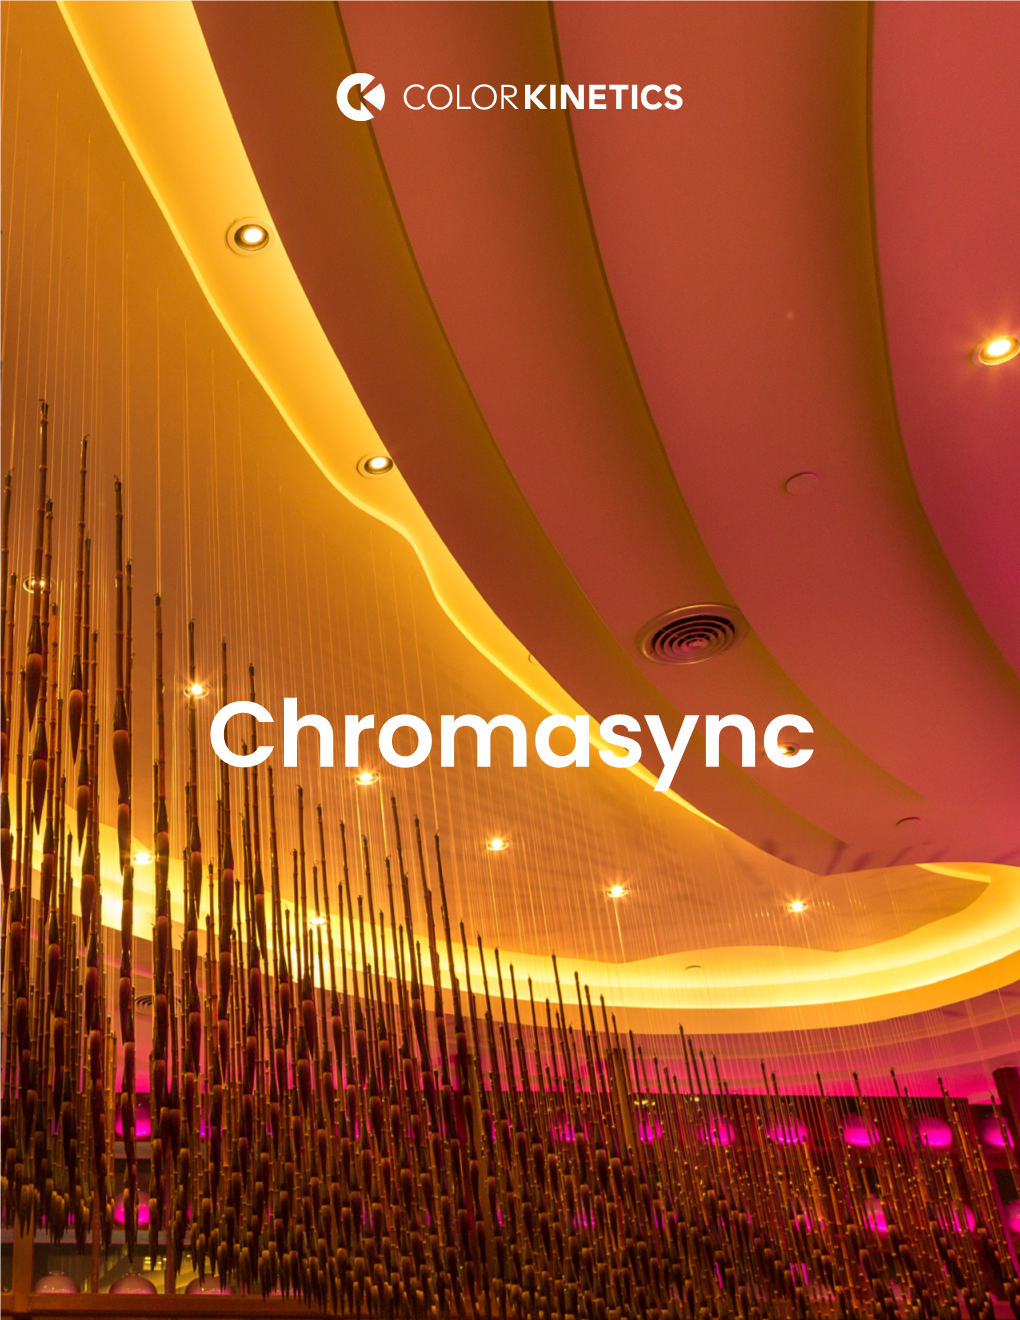 Chromasync Chromasync Brings New Consistency to Dynamic Color Luminaires